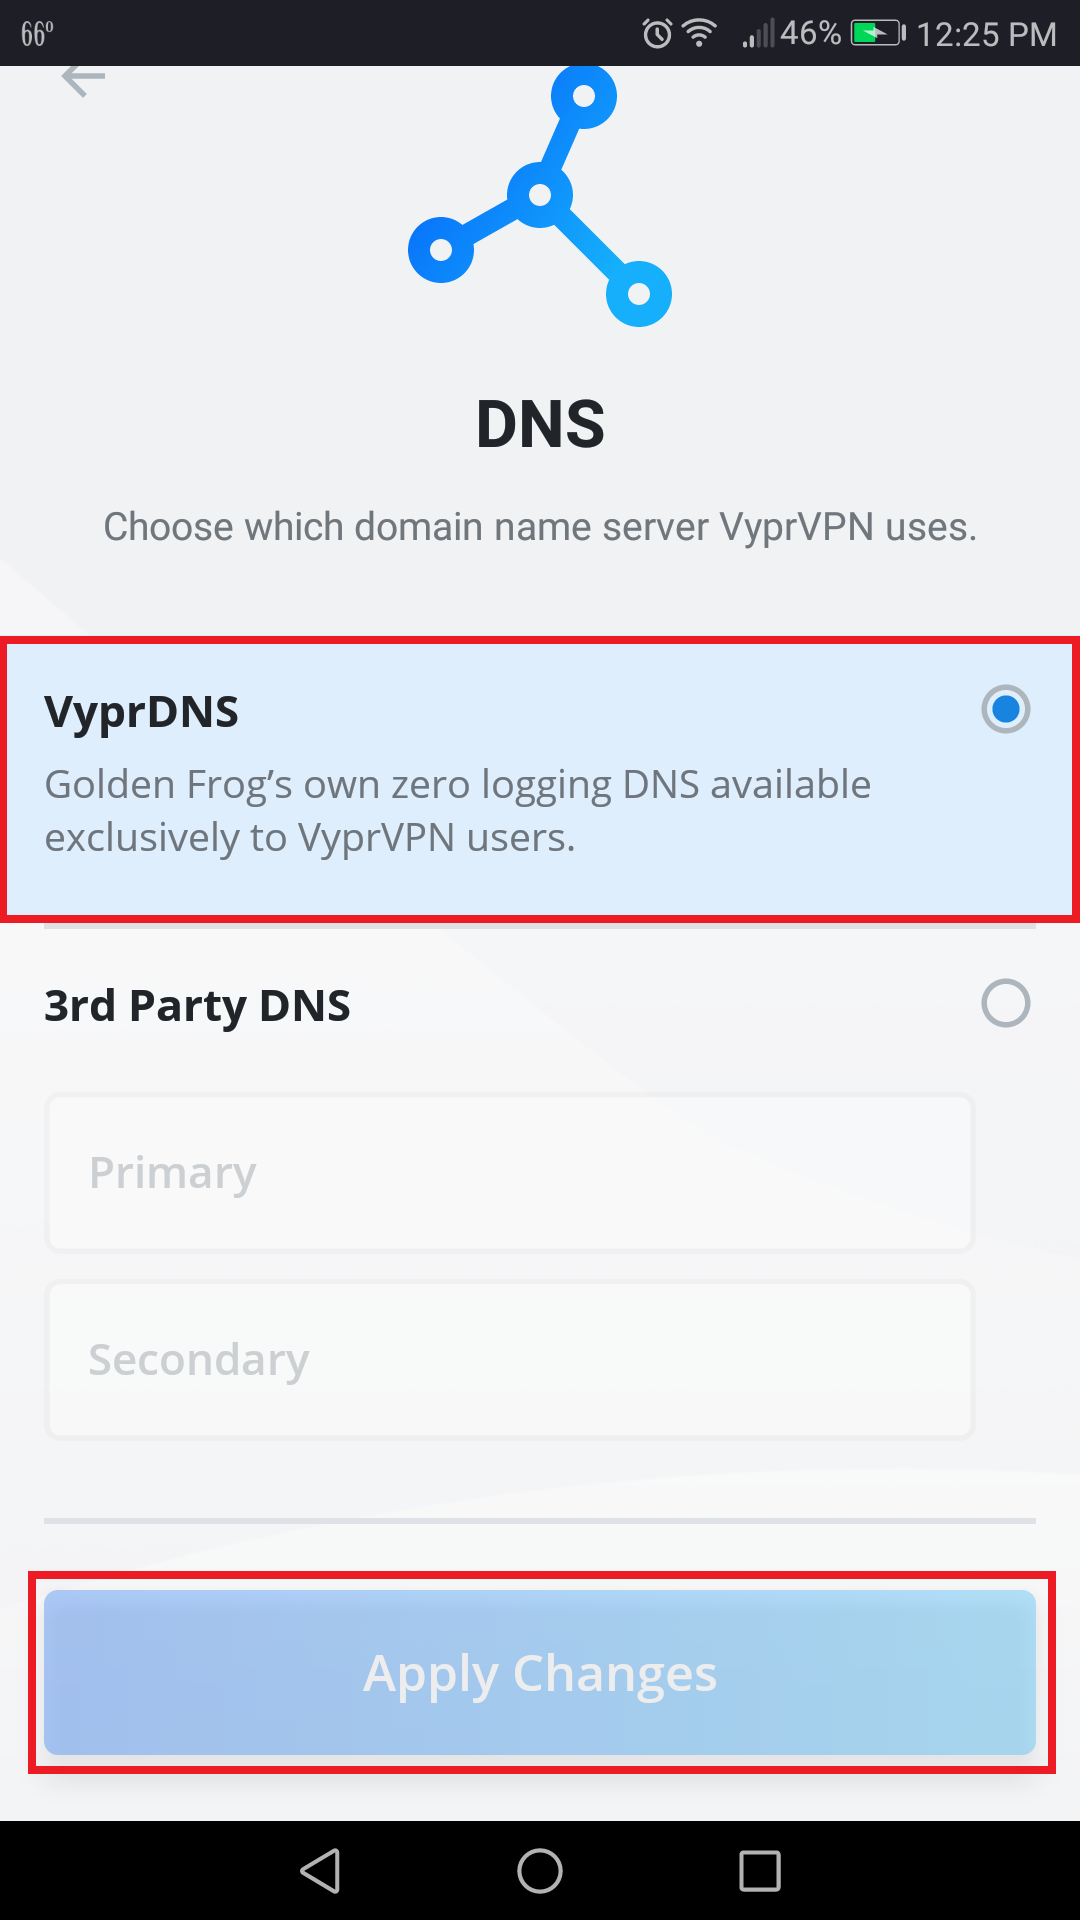 Vypr_App_-_DNS_Menu_-_VyprDNS_and_Apply_Changes_Selected.png